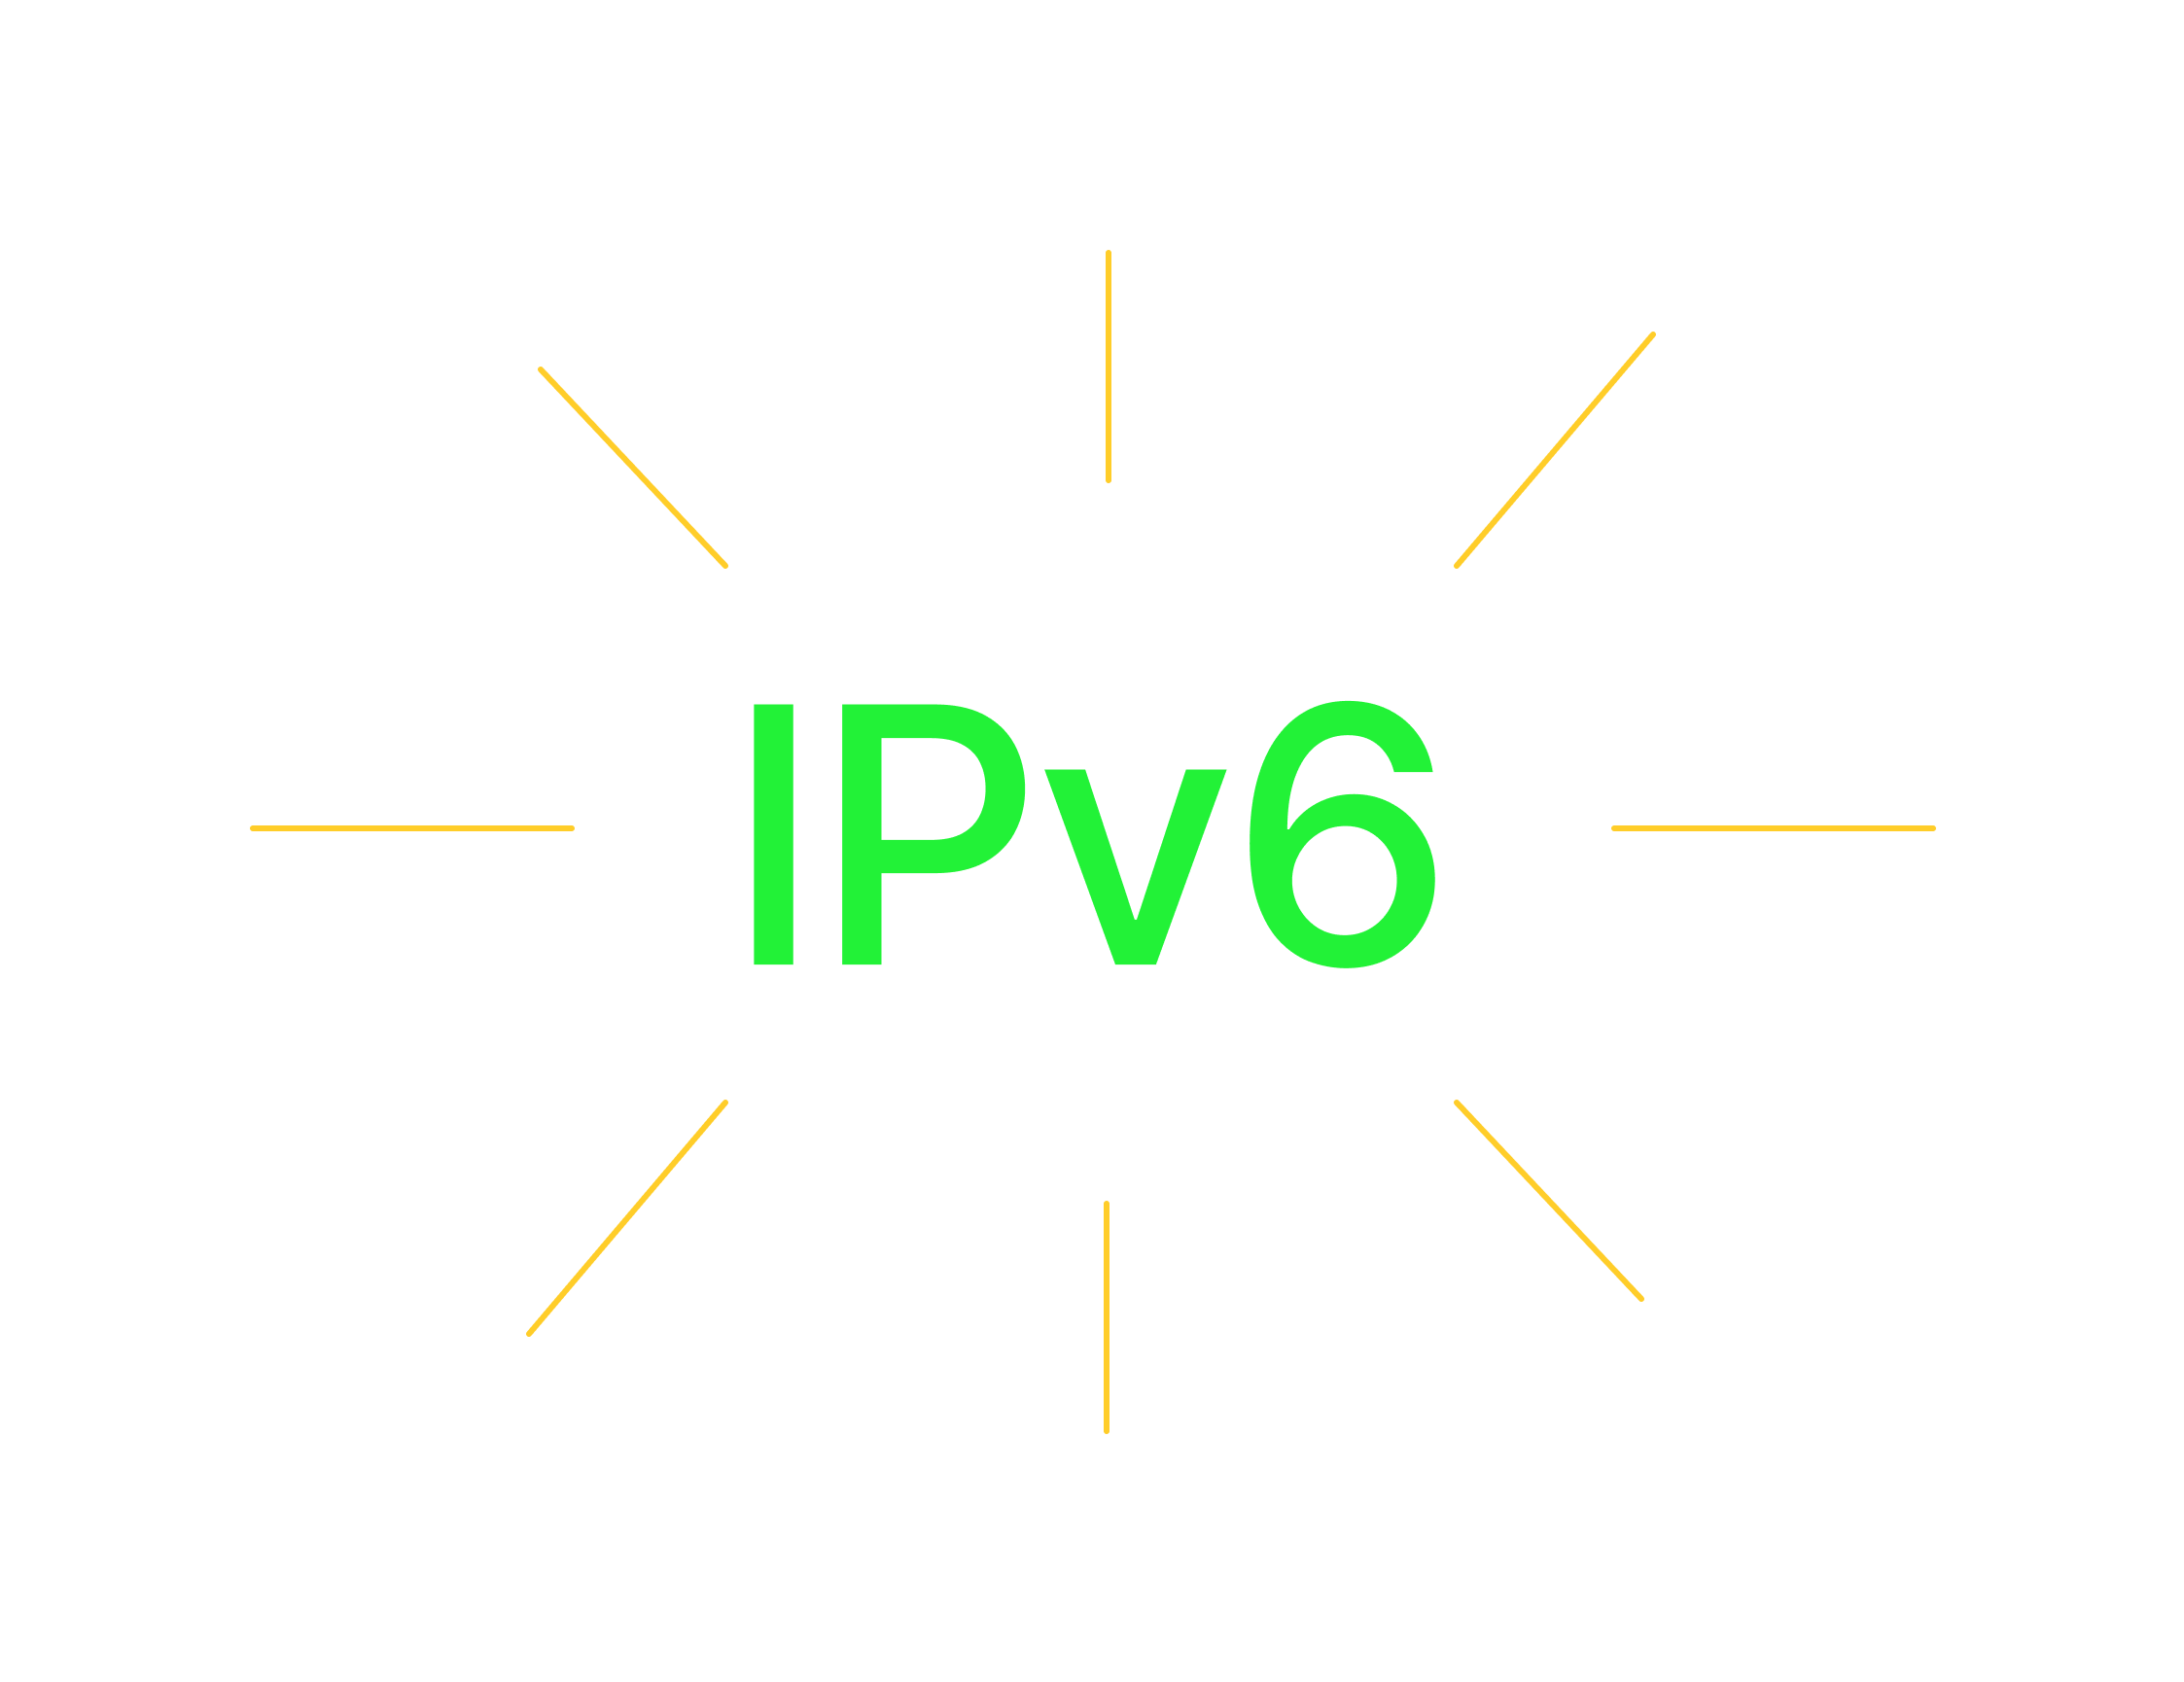 IPv6 Text popping